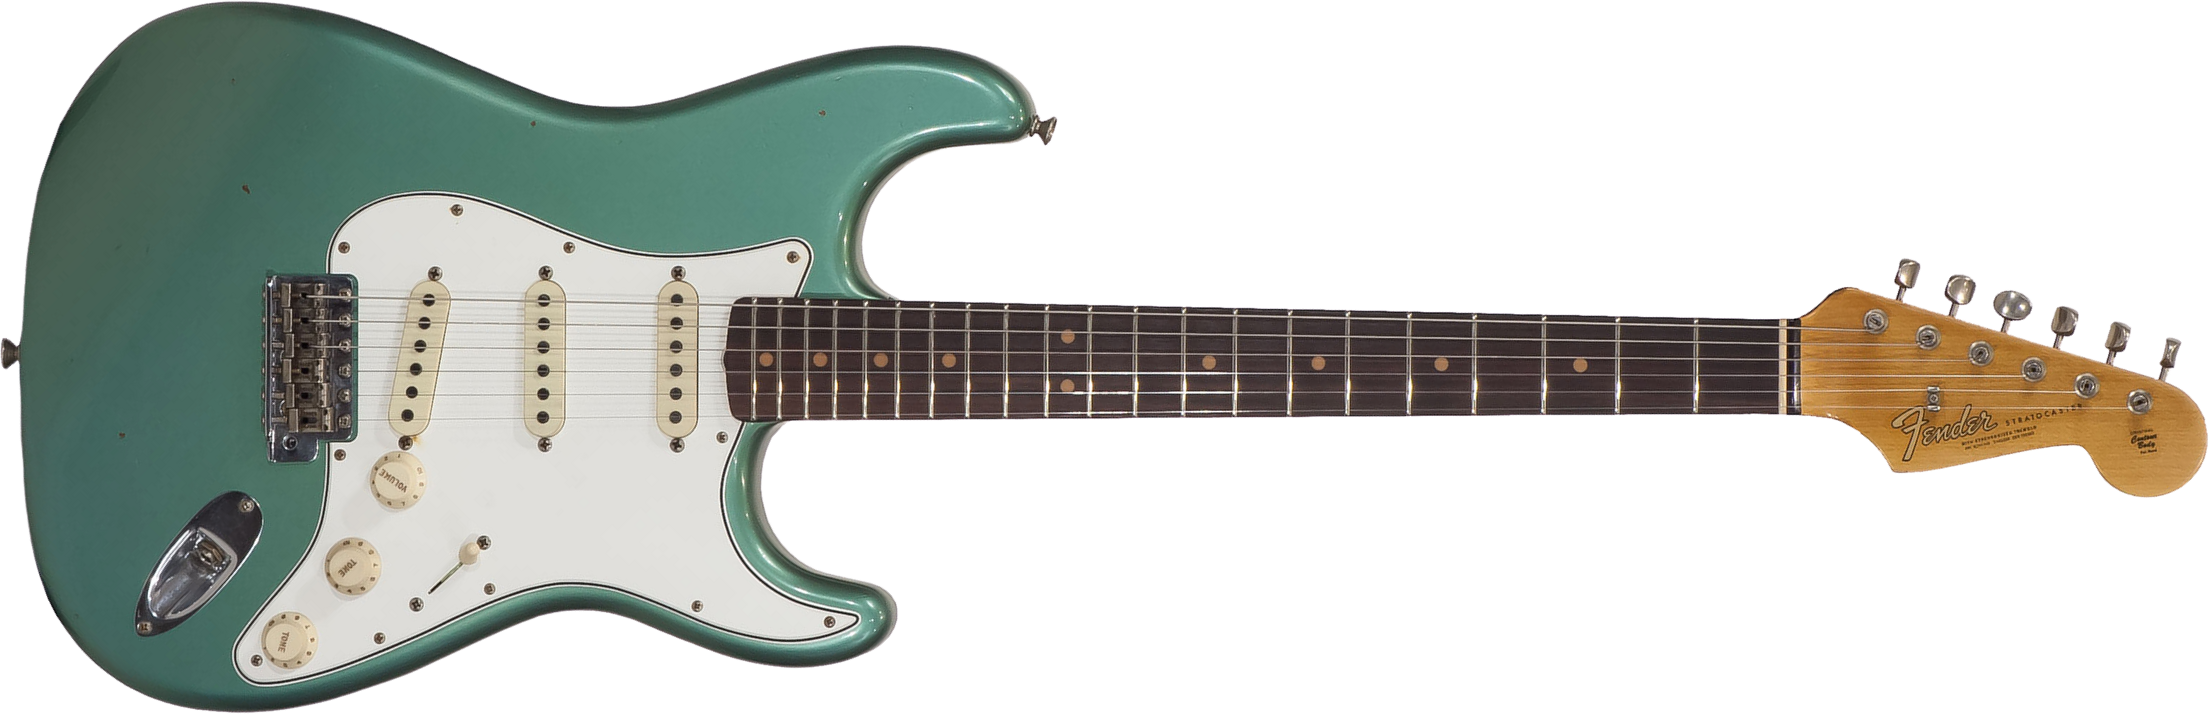 Fender Custom Shop Strat 64 Ltd 2018 Rw - Journeyman Relic Sage Green Metallic - Str shape electric guitar - Main picture